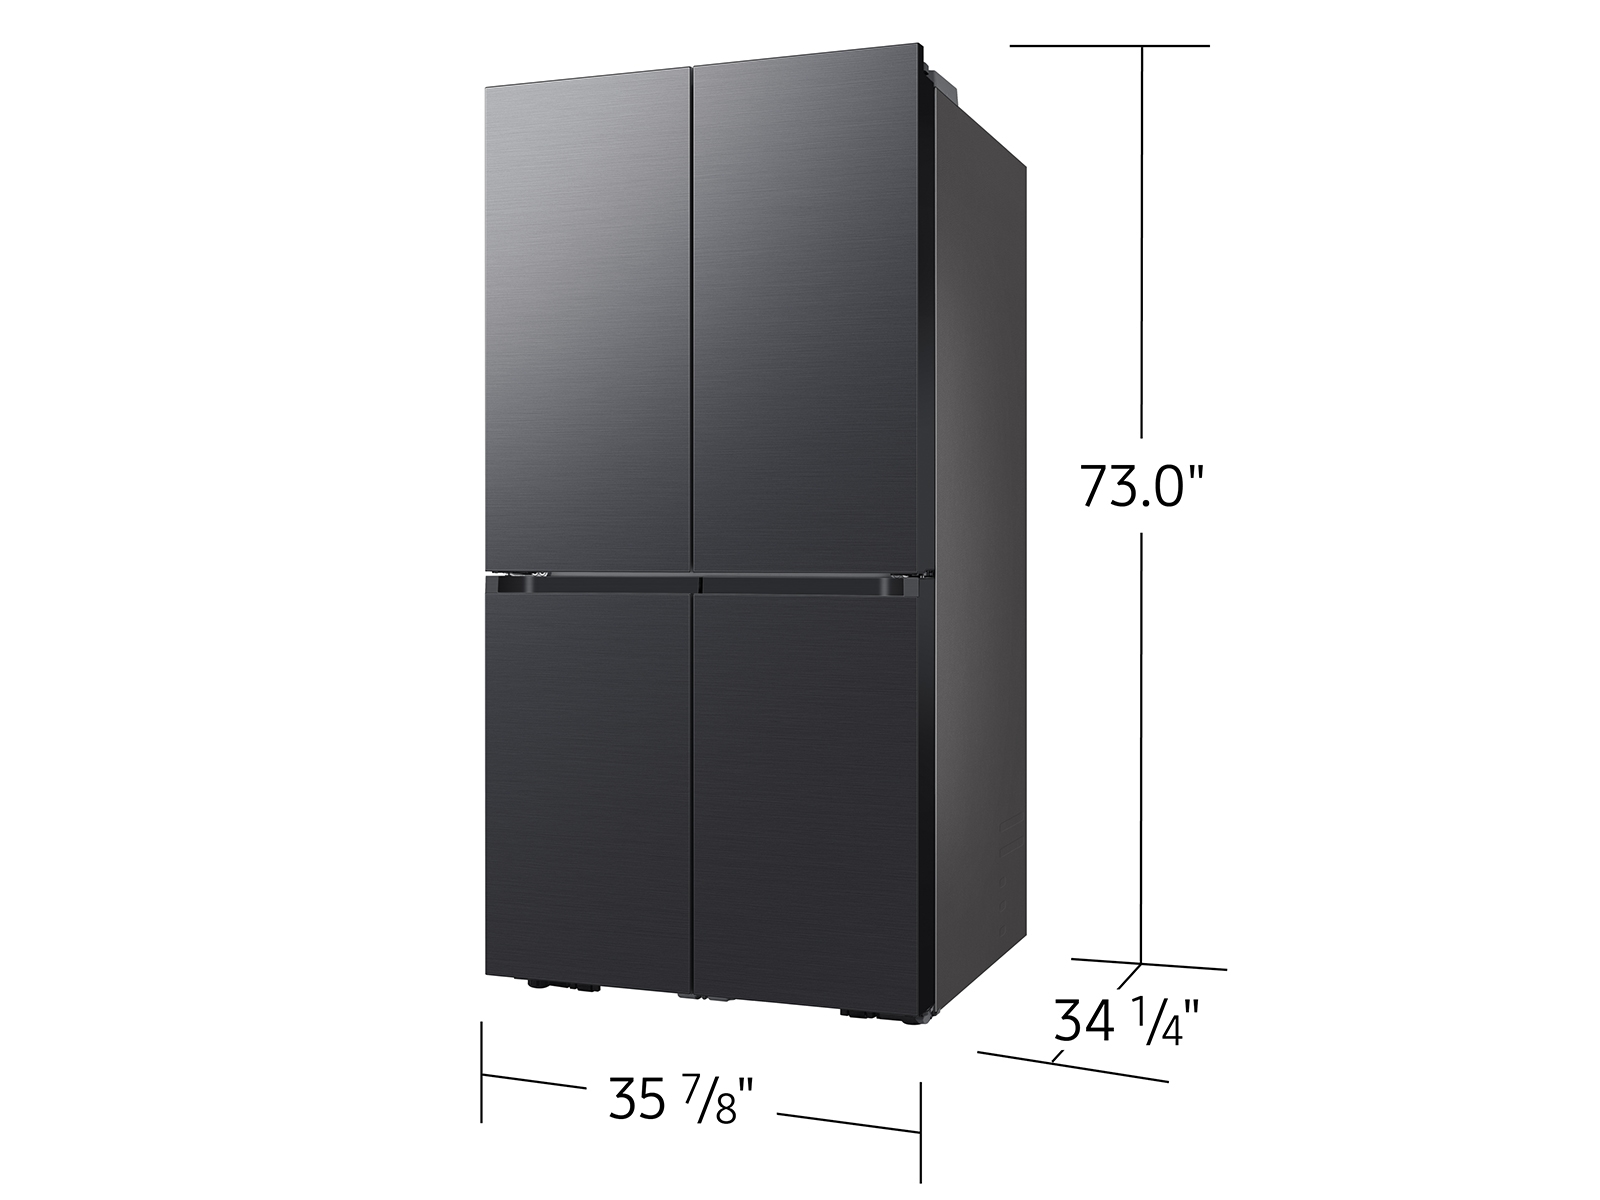 Samsung - Bespoke 29 Cu. ft 4-Door French Door Refrigerator with Autofill Water Pitcher - Stainless Steel